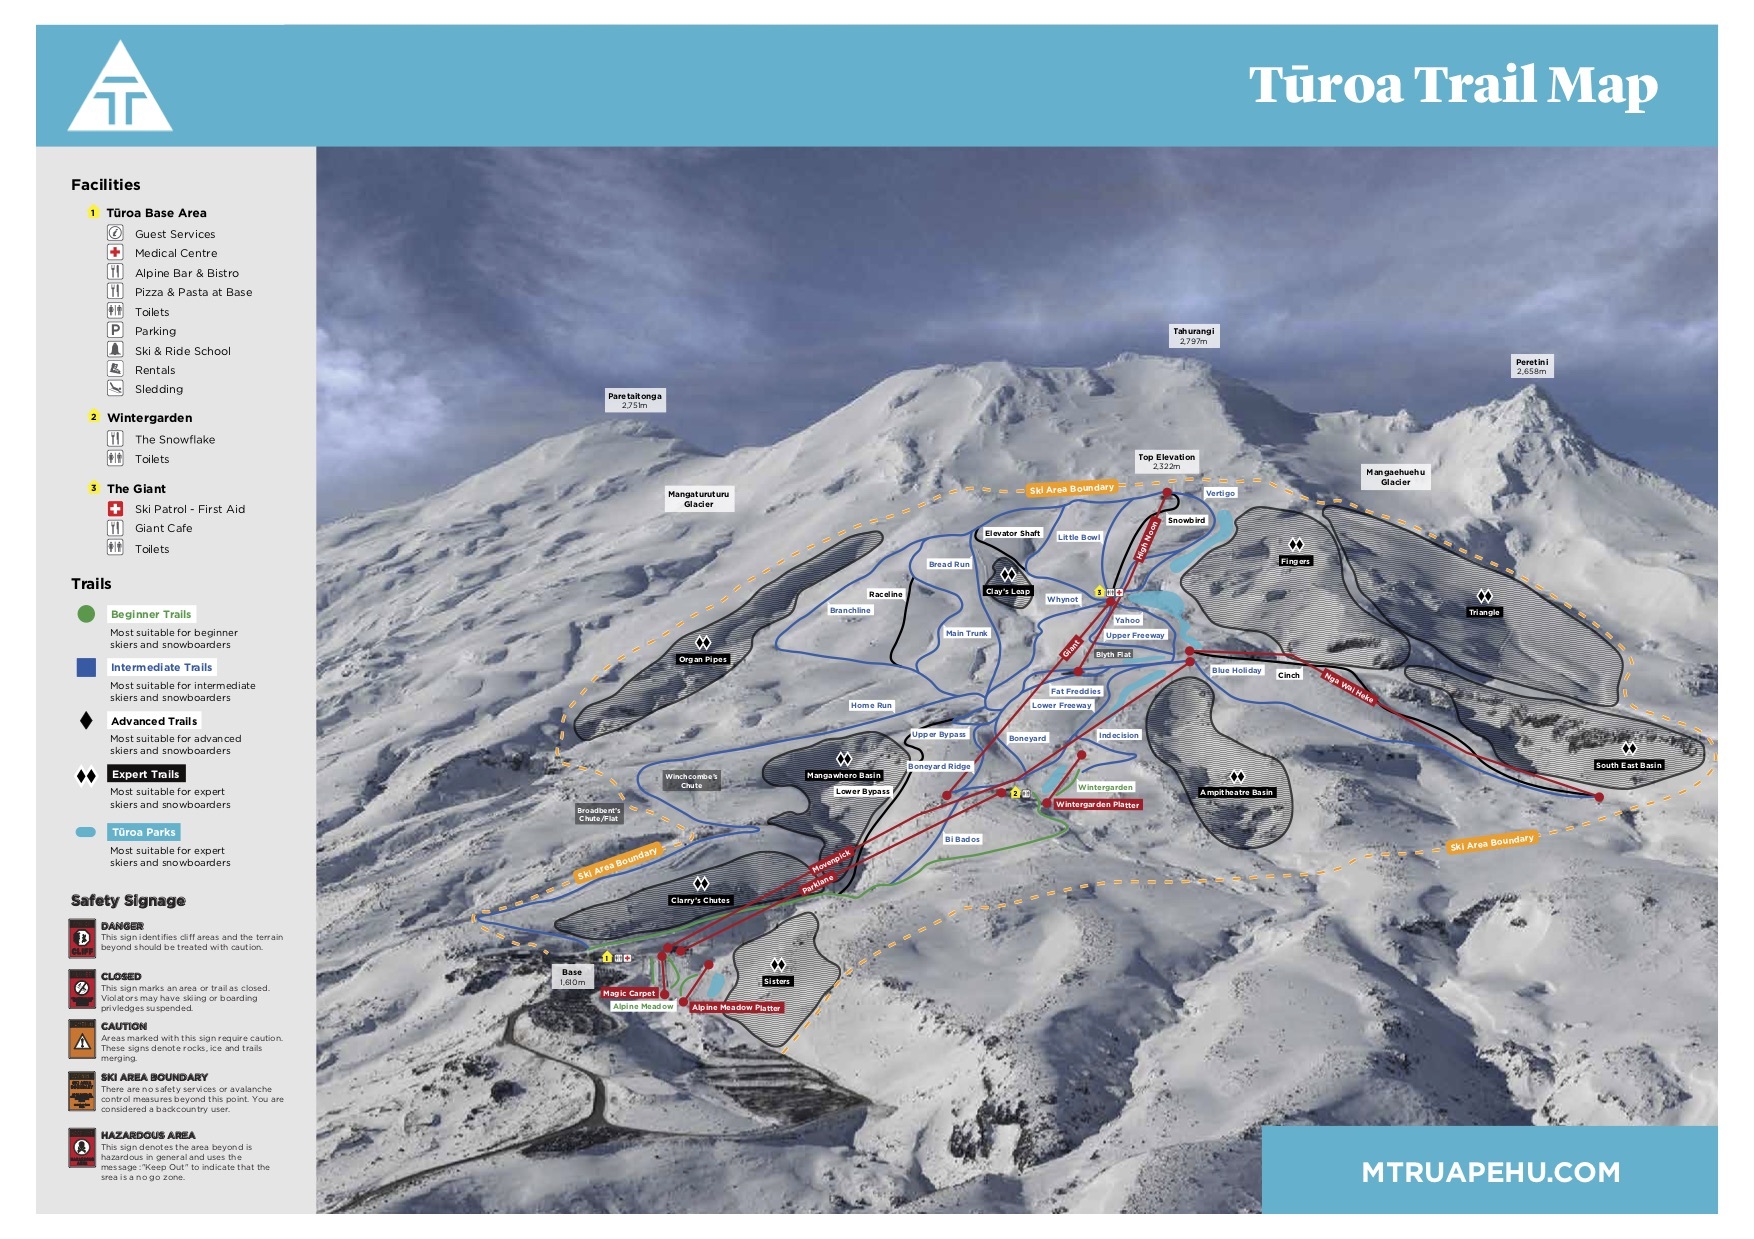 Turoa Piste / Trail Map